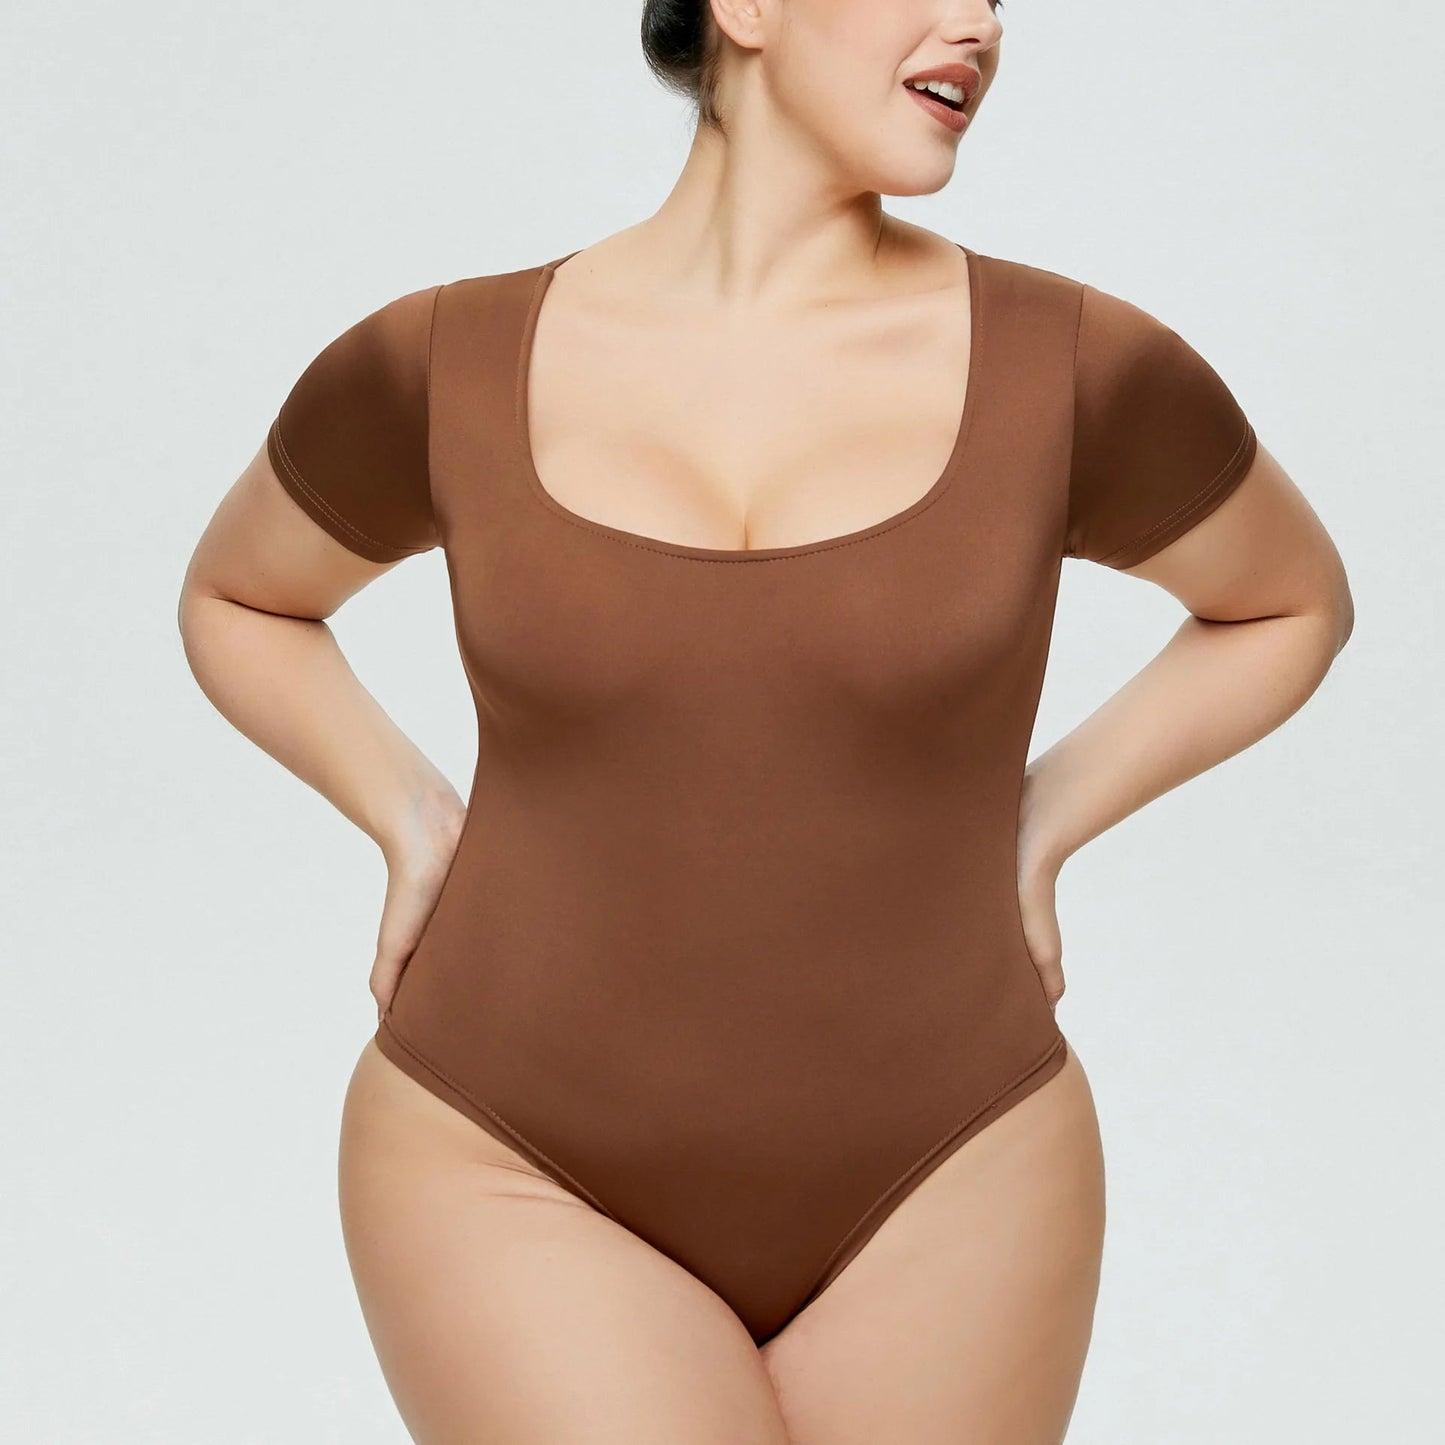 Cutefit Petal Soft Short Sleeve Bodysuit - Cutefit - Bodysuit - 14:1254#37314 brown;5:4181#2XL